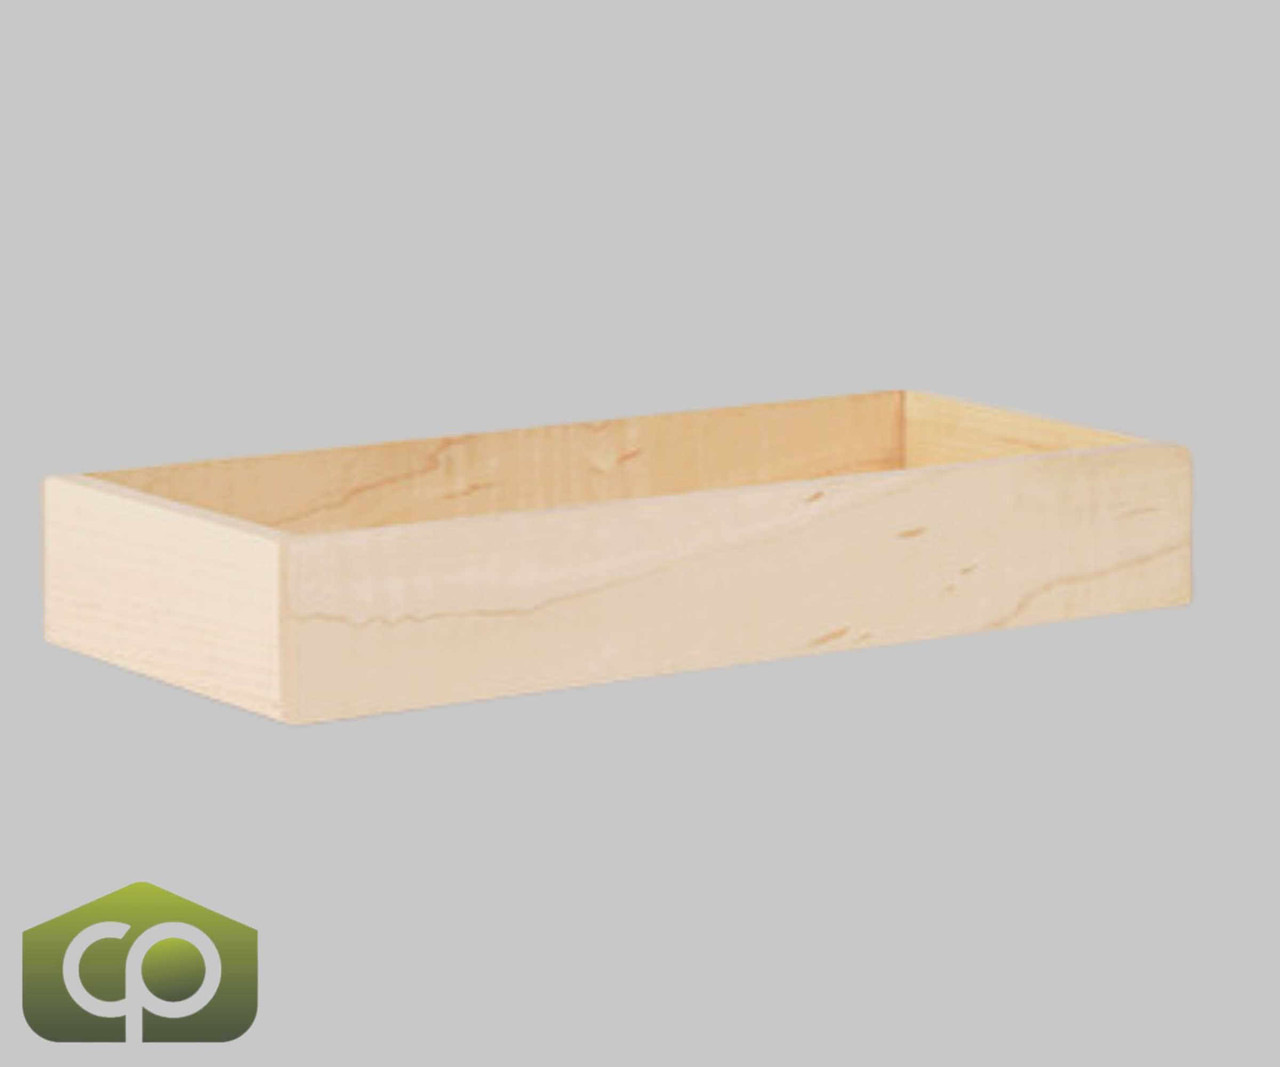 Cal-Mil Blonde Maple Wood Display Box - 6" x 12" x 2" - Natural Wood Merchandiser